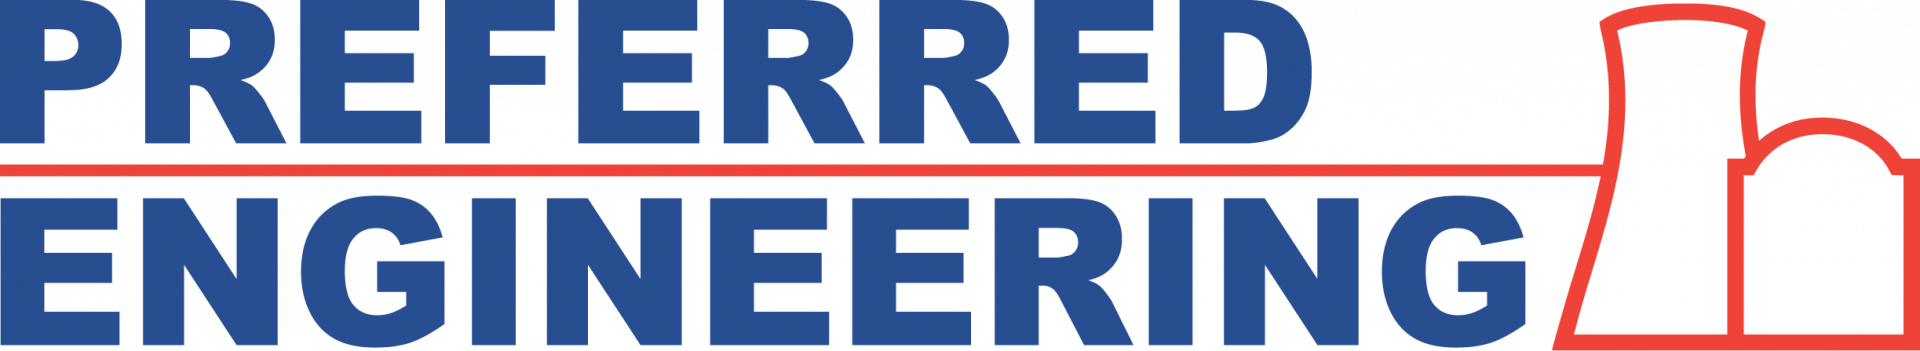 Preferred Engineering Corp. logo